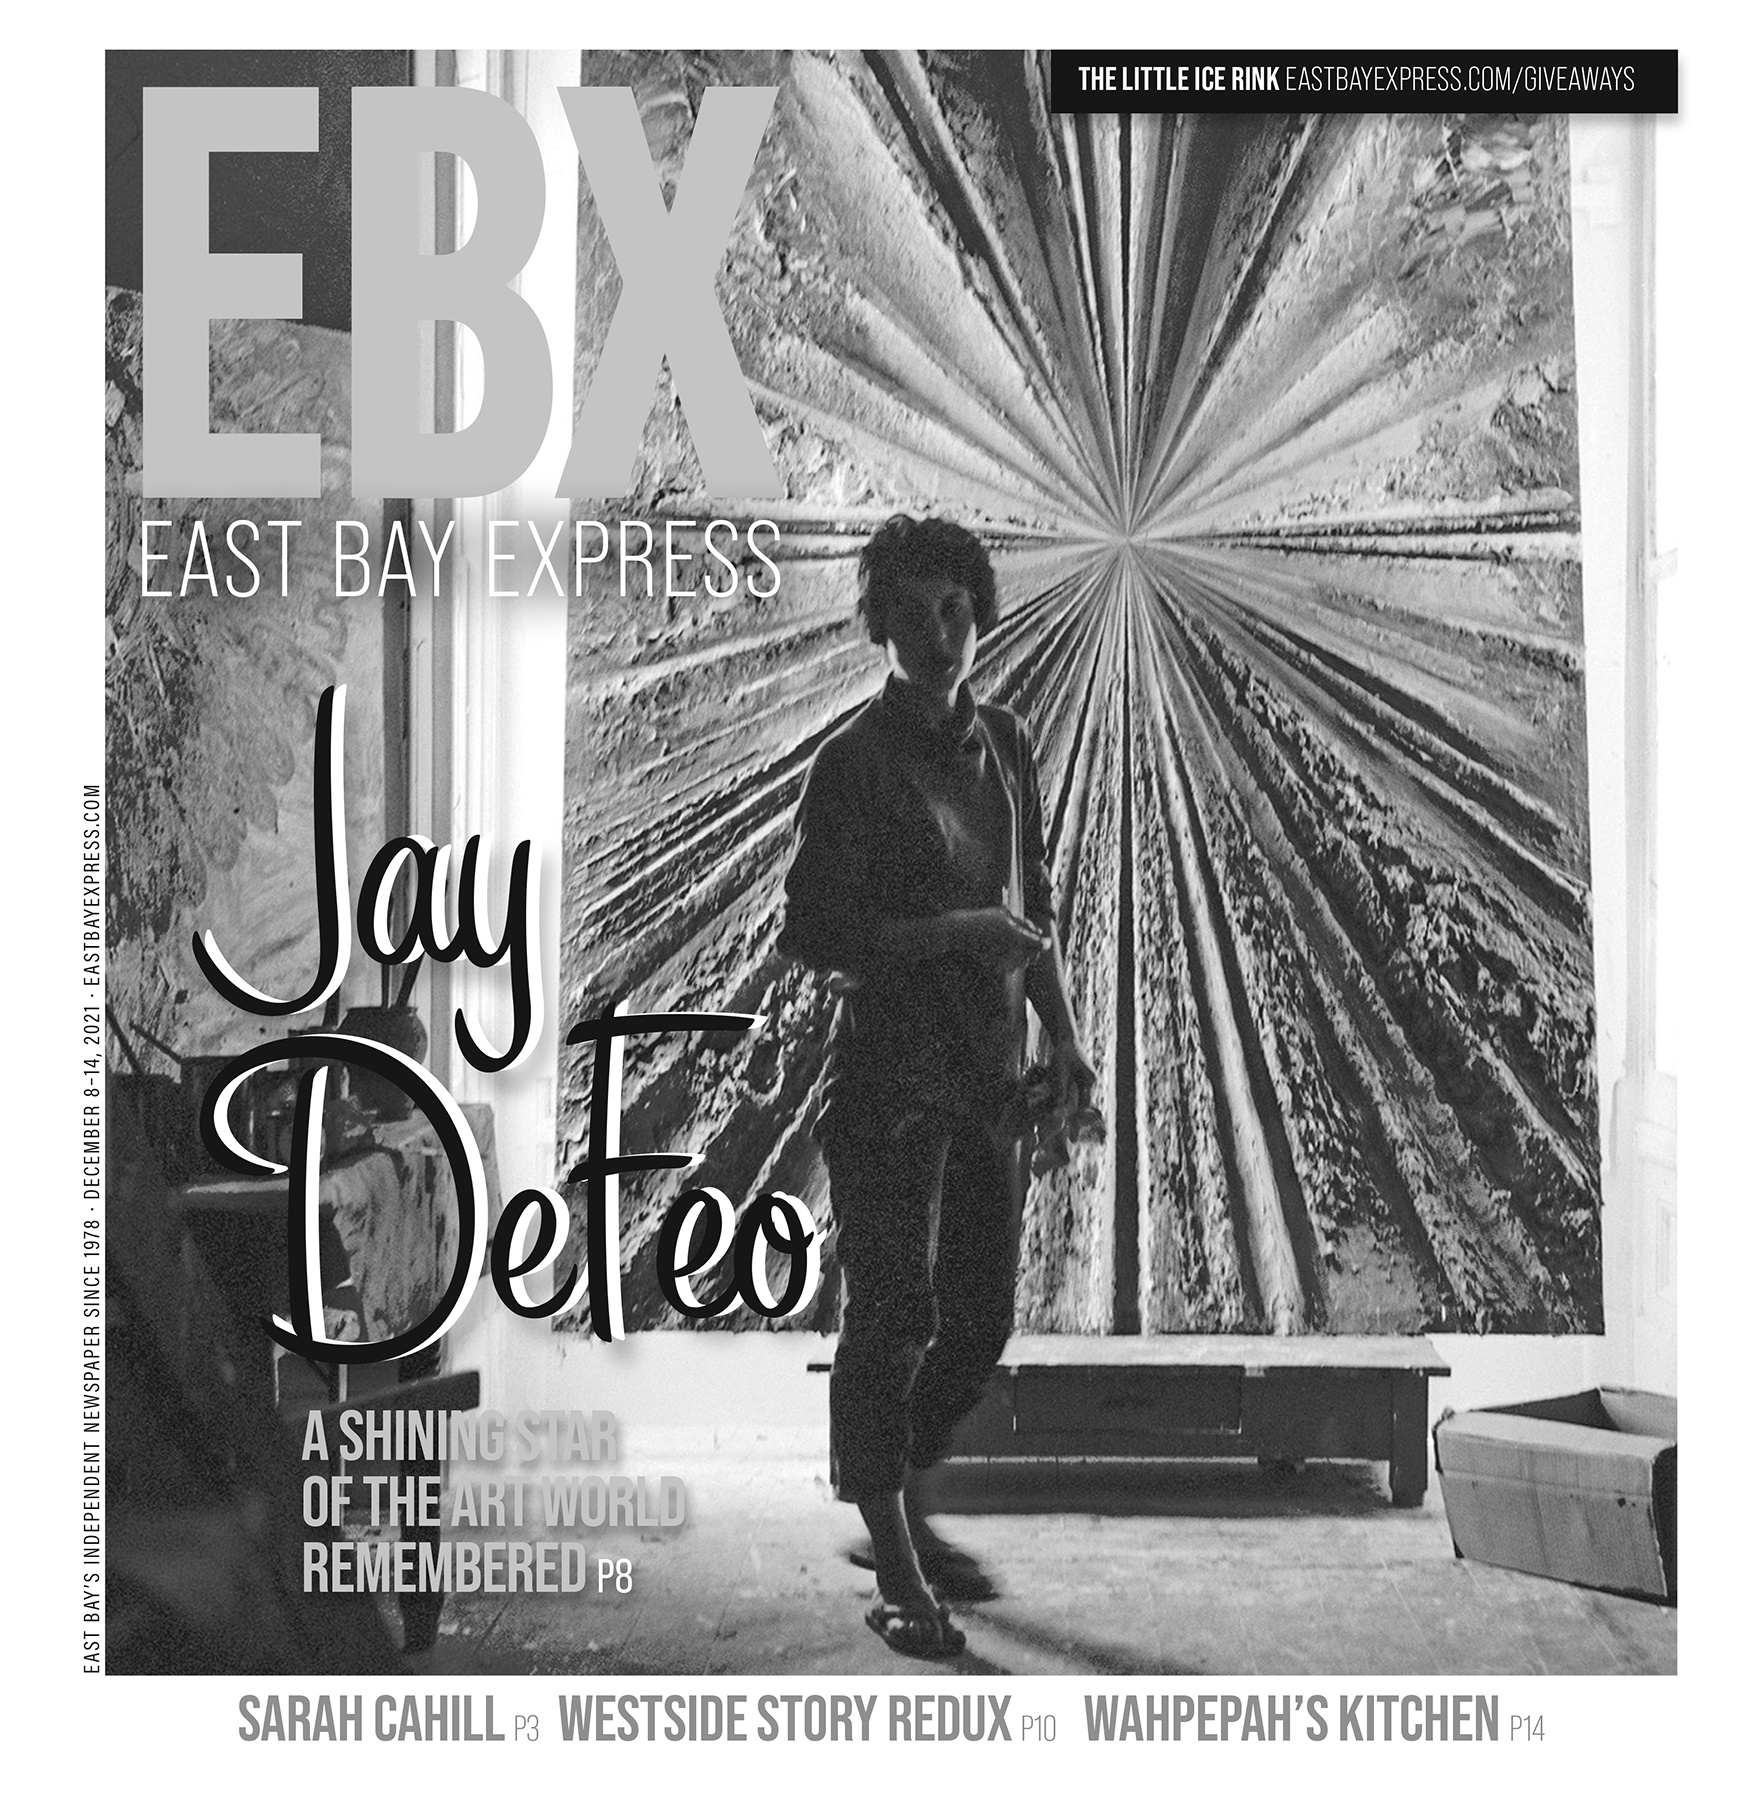 No lo hagas Porra Limitado East Bay Express - 'Rip Tails': Jordan Stein's latest book delves into the  impacts of Jay DeFeo's art - The Jay DeFeo Foundation